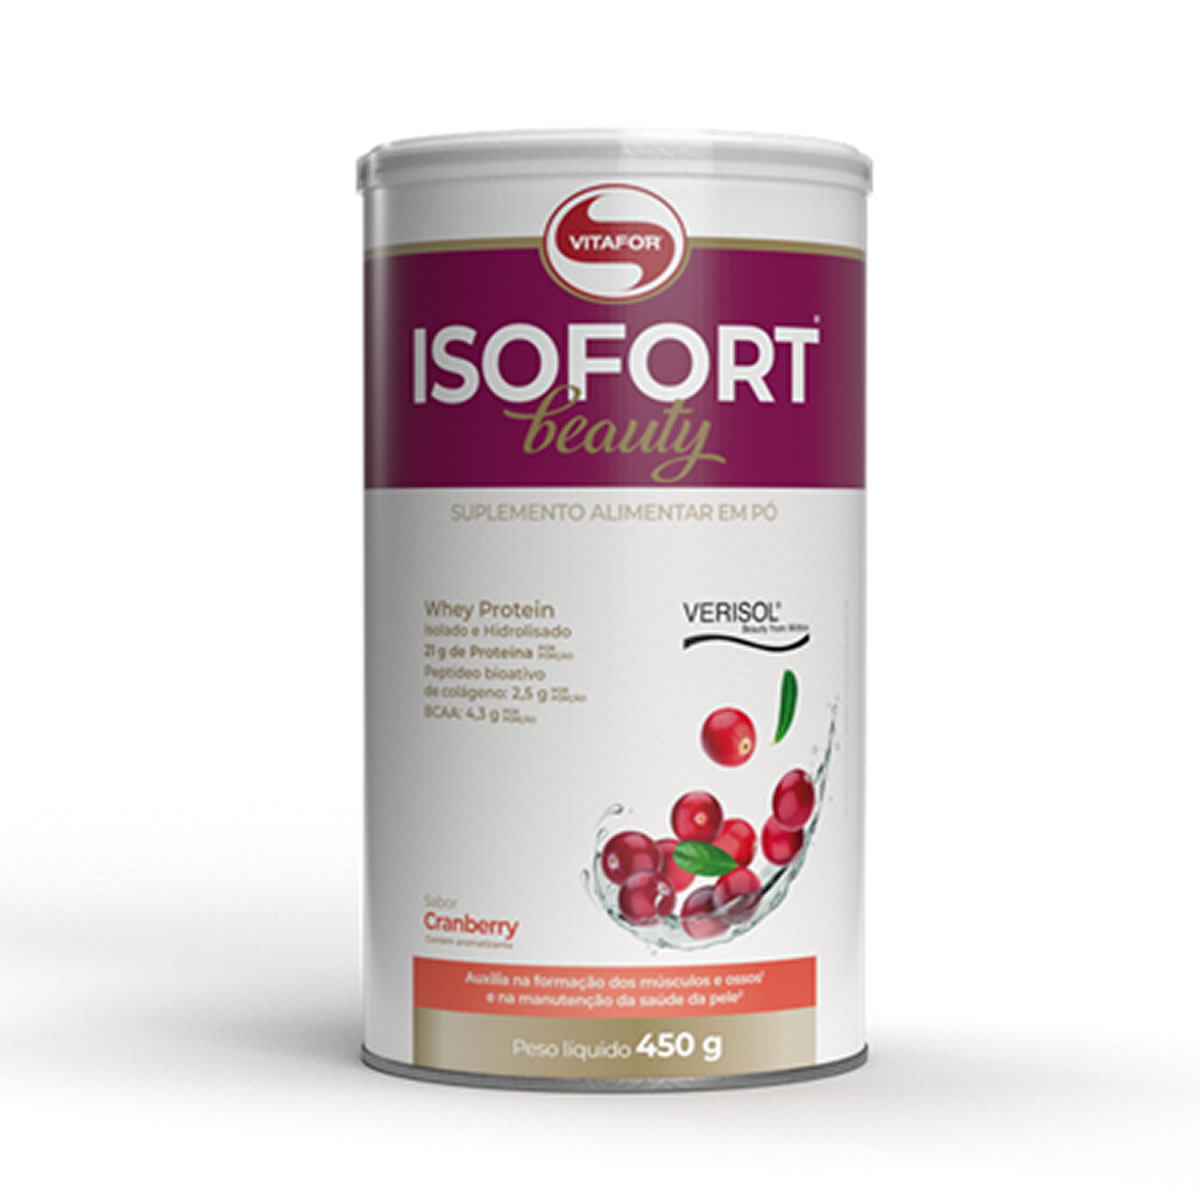 Isofort Beauty sabor Cranberry 450g - Vitafor